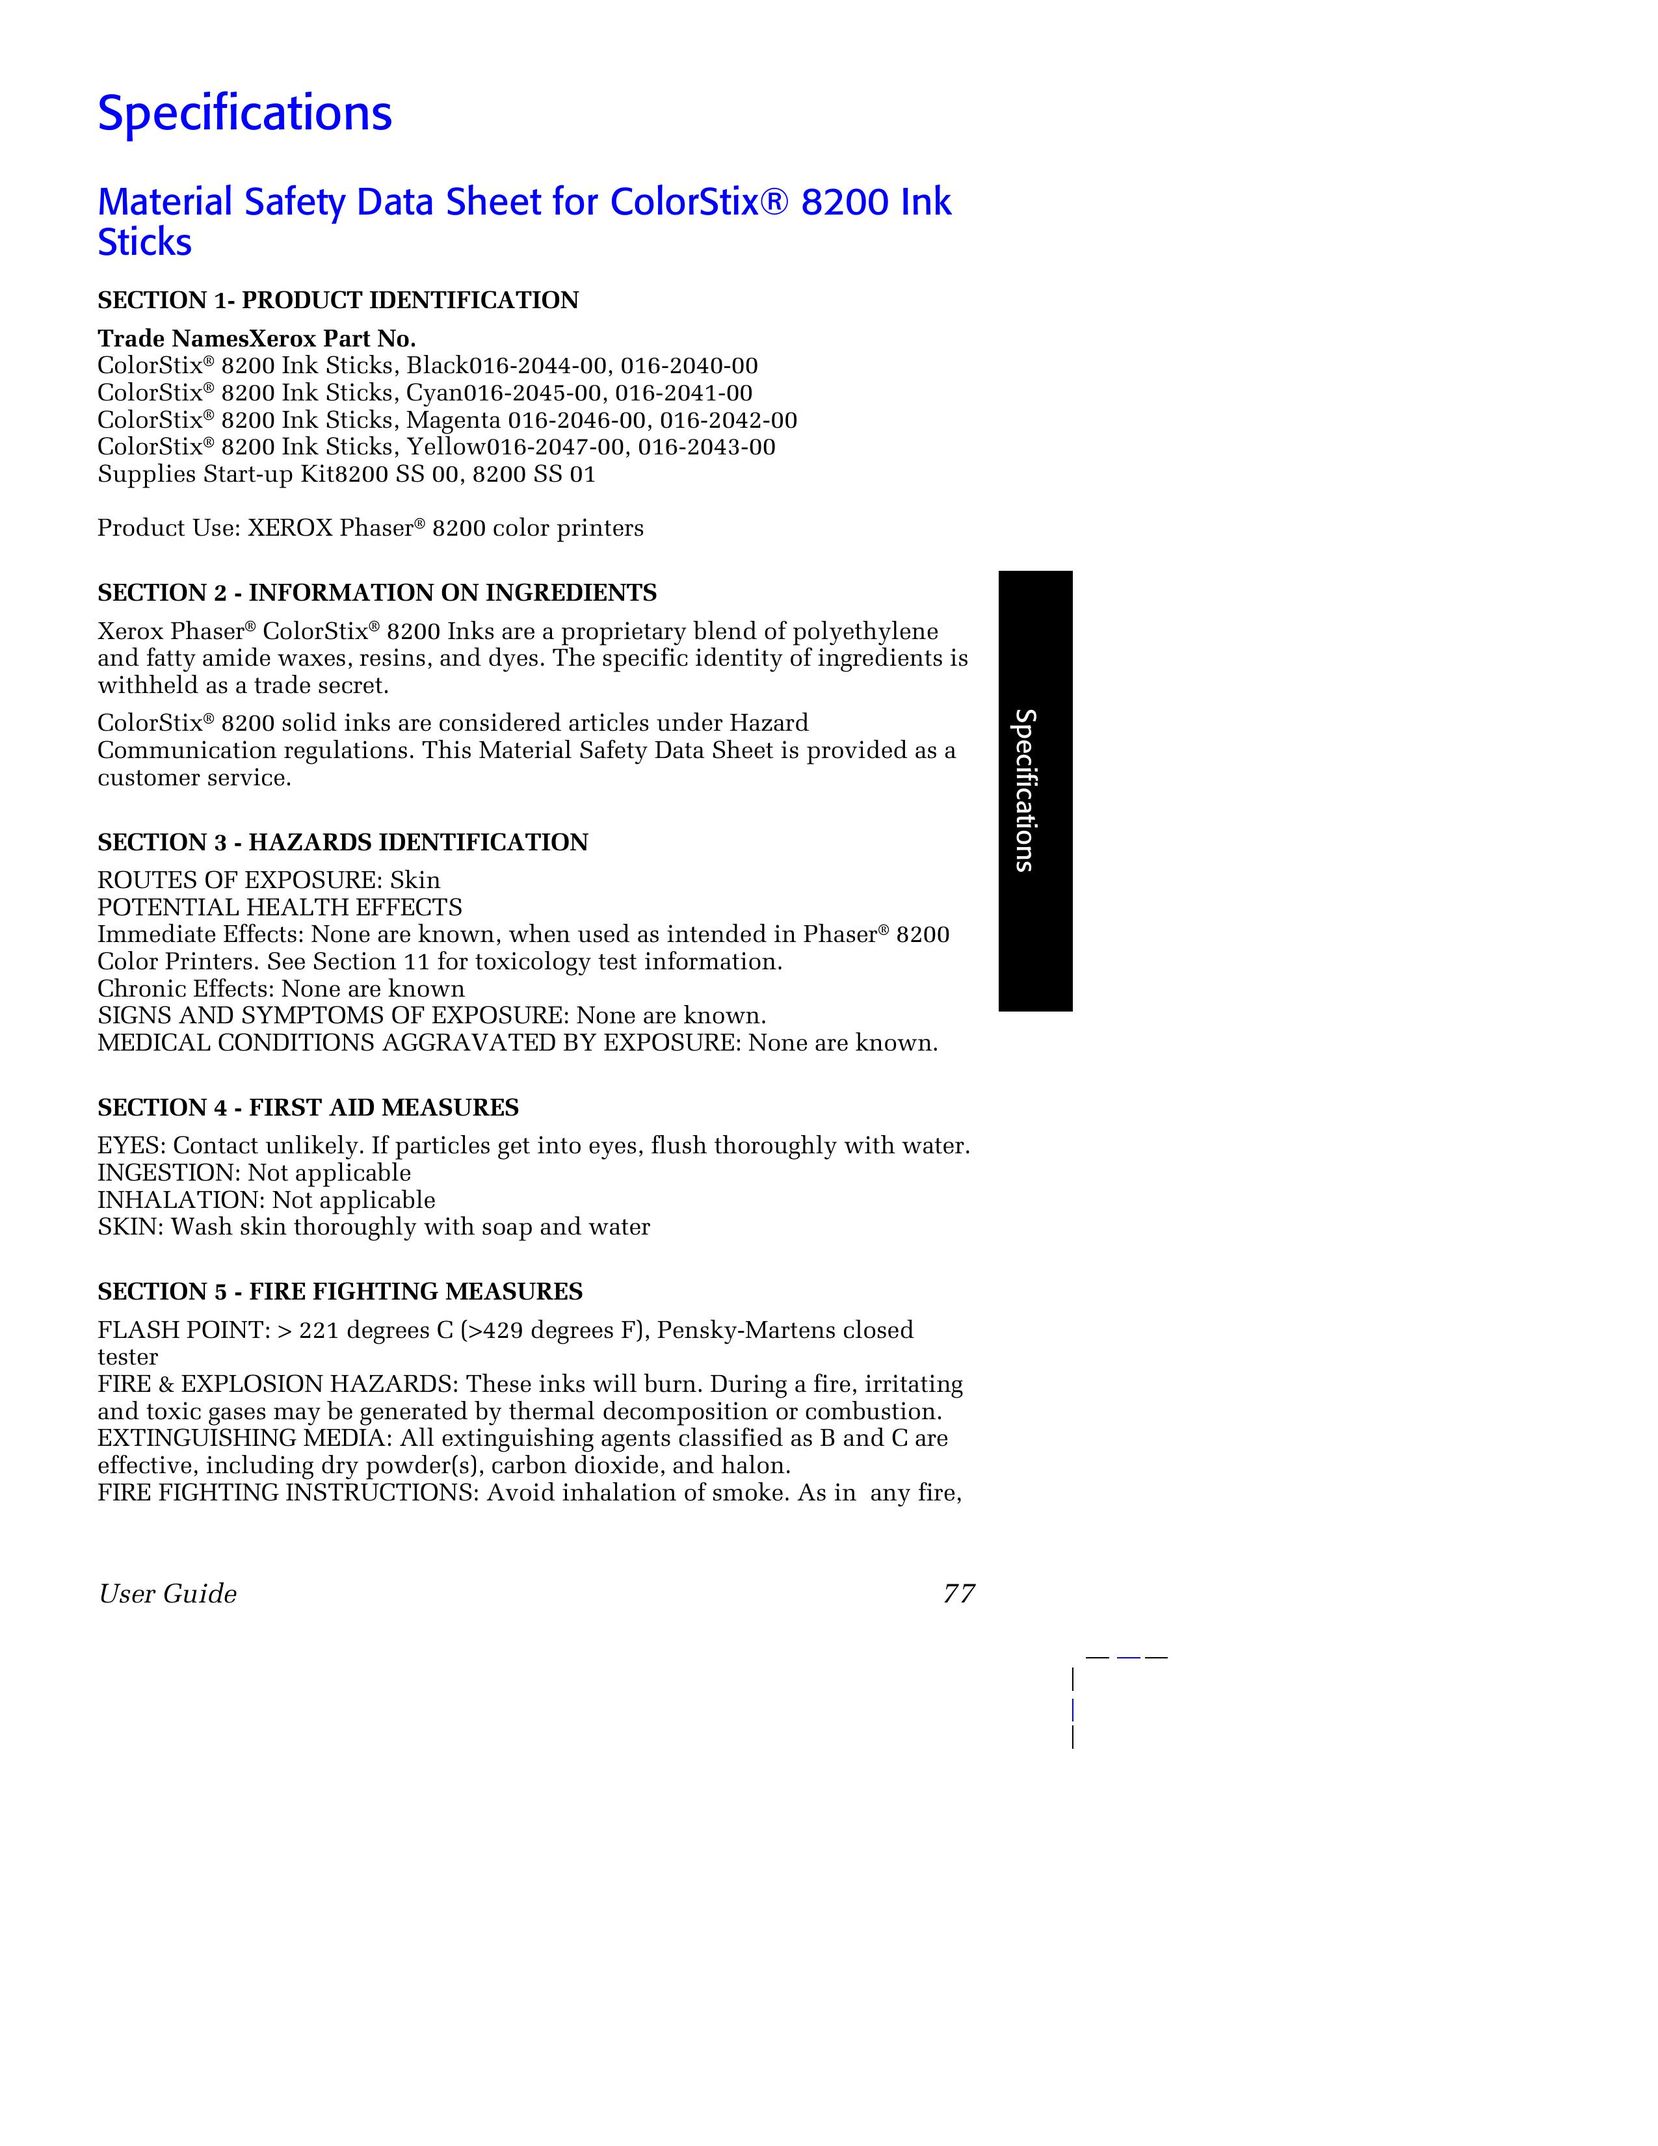 Xerox 016-2041-00 Printer Accessories User Manual